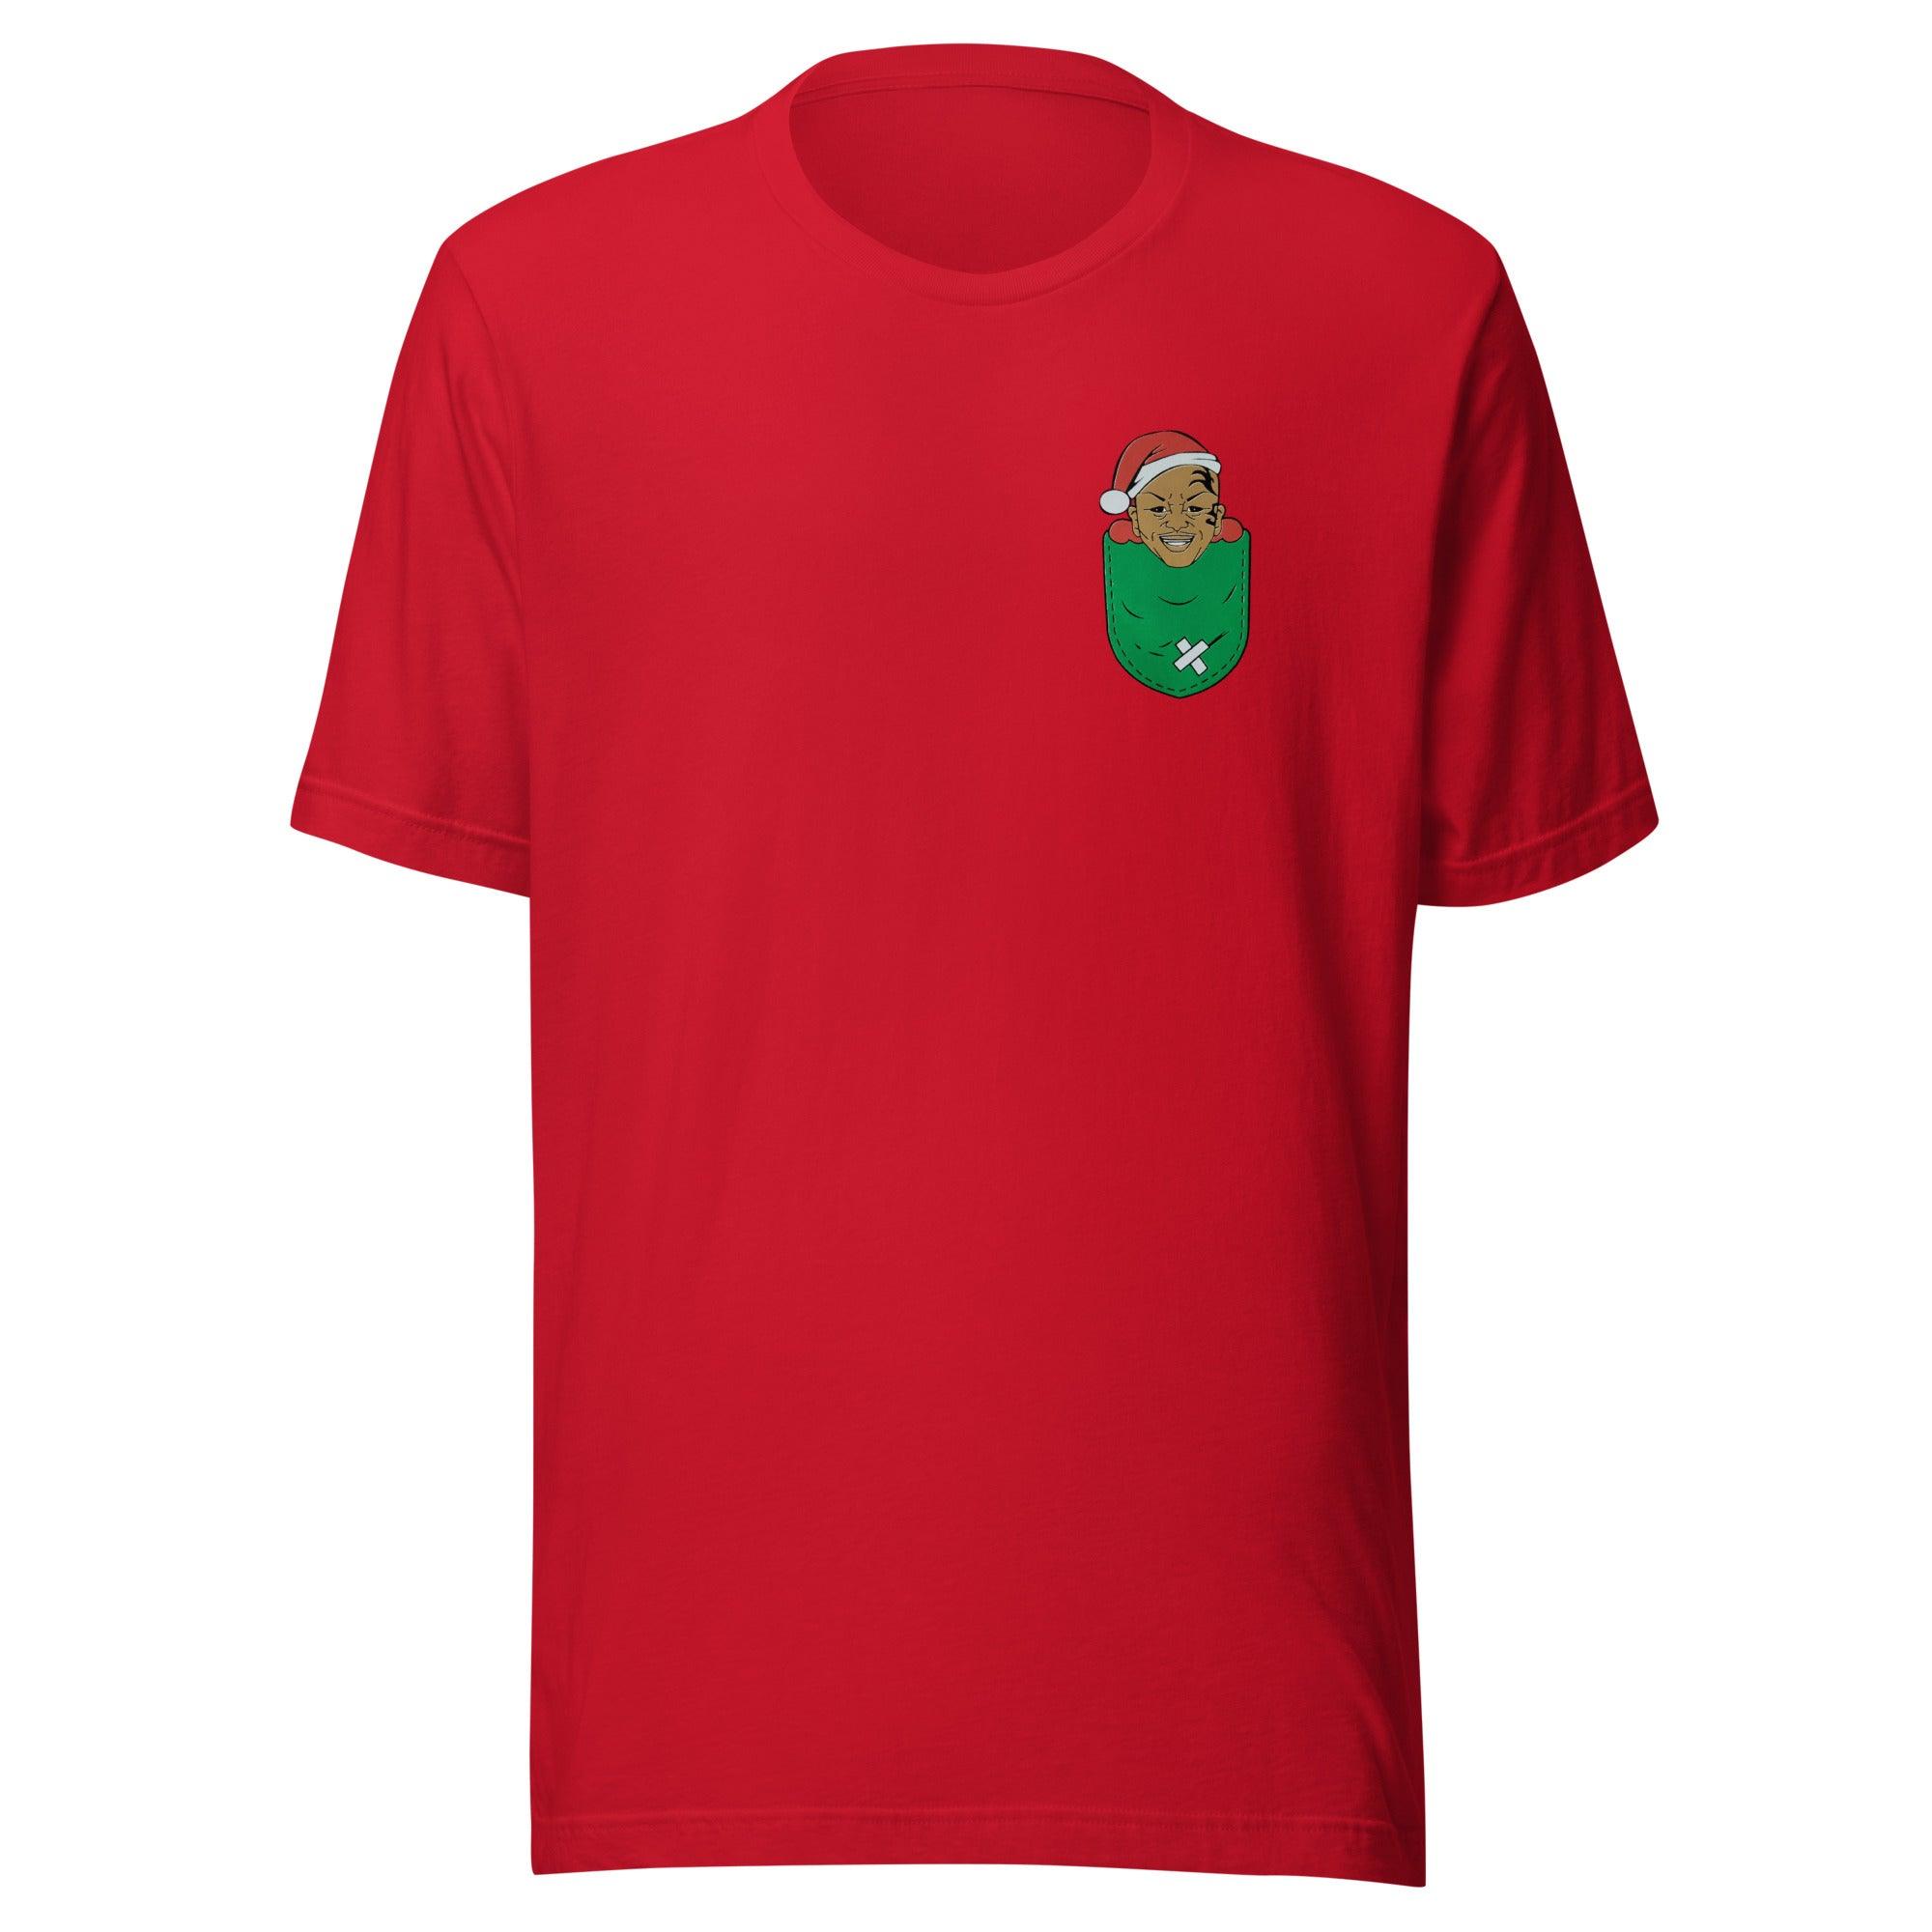 Pocket Mike Tyson with Santa Hat Short Sleeve T-Shirt - TopKoalaTee